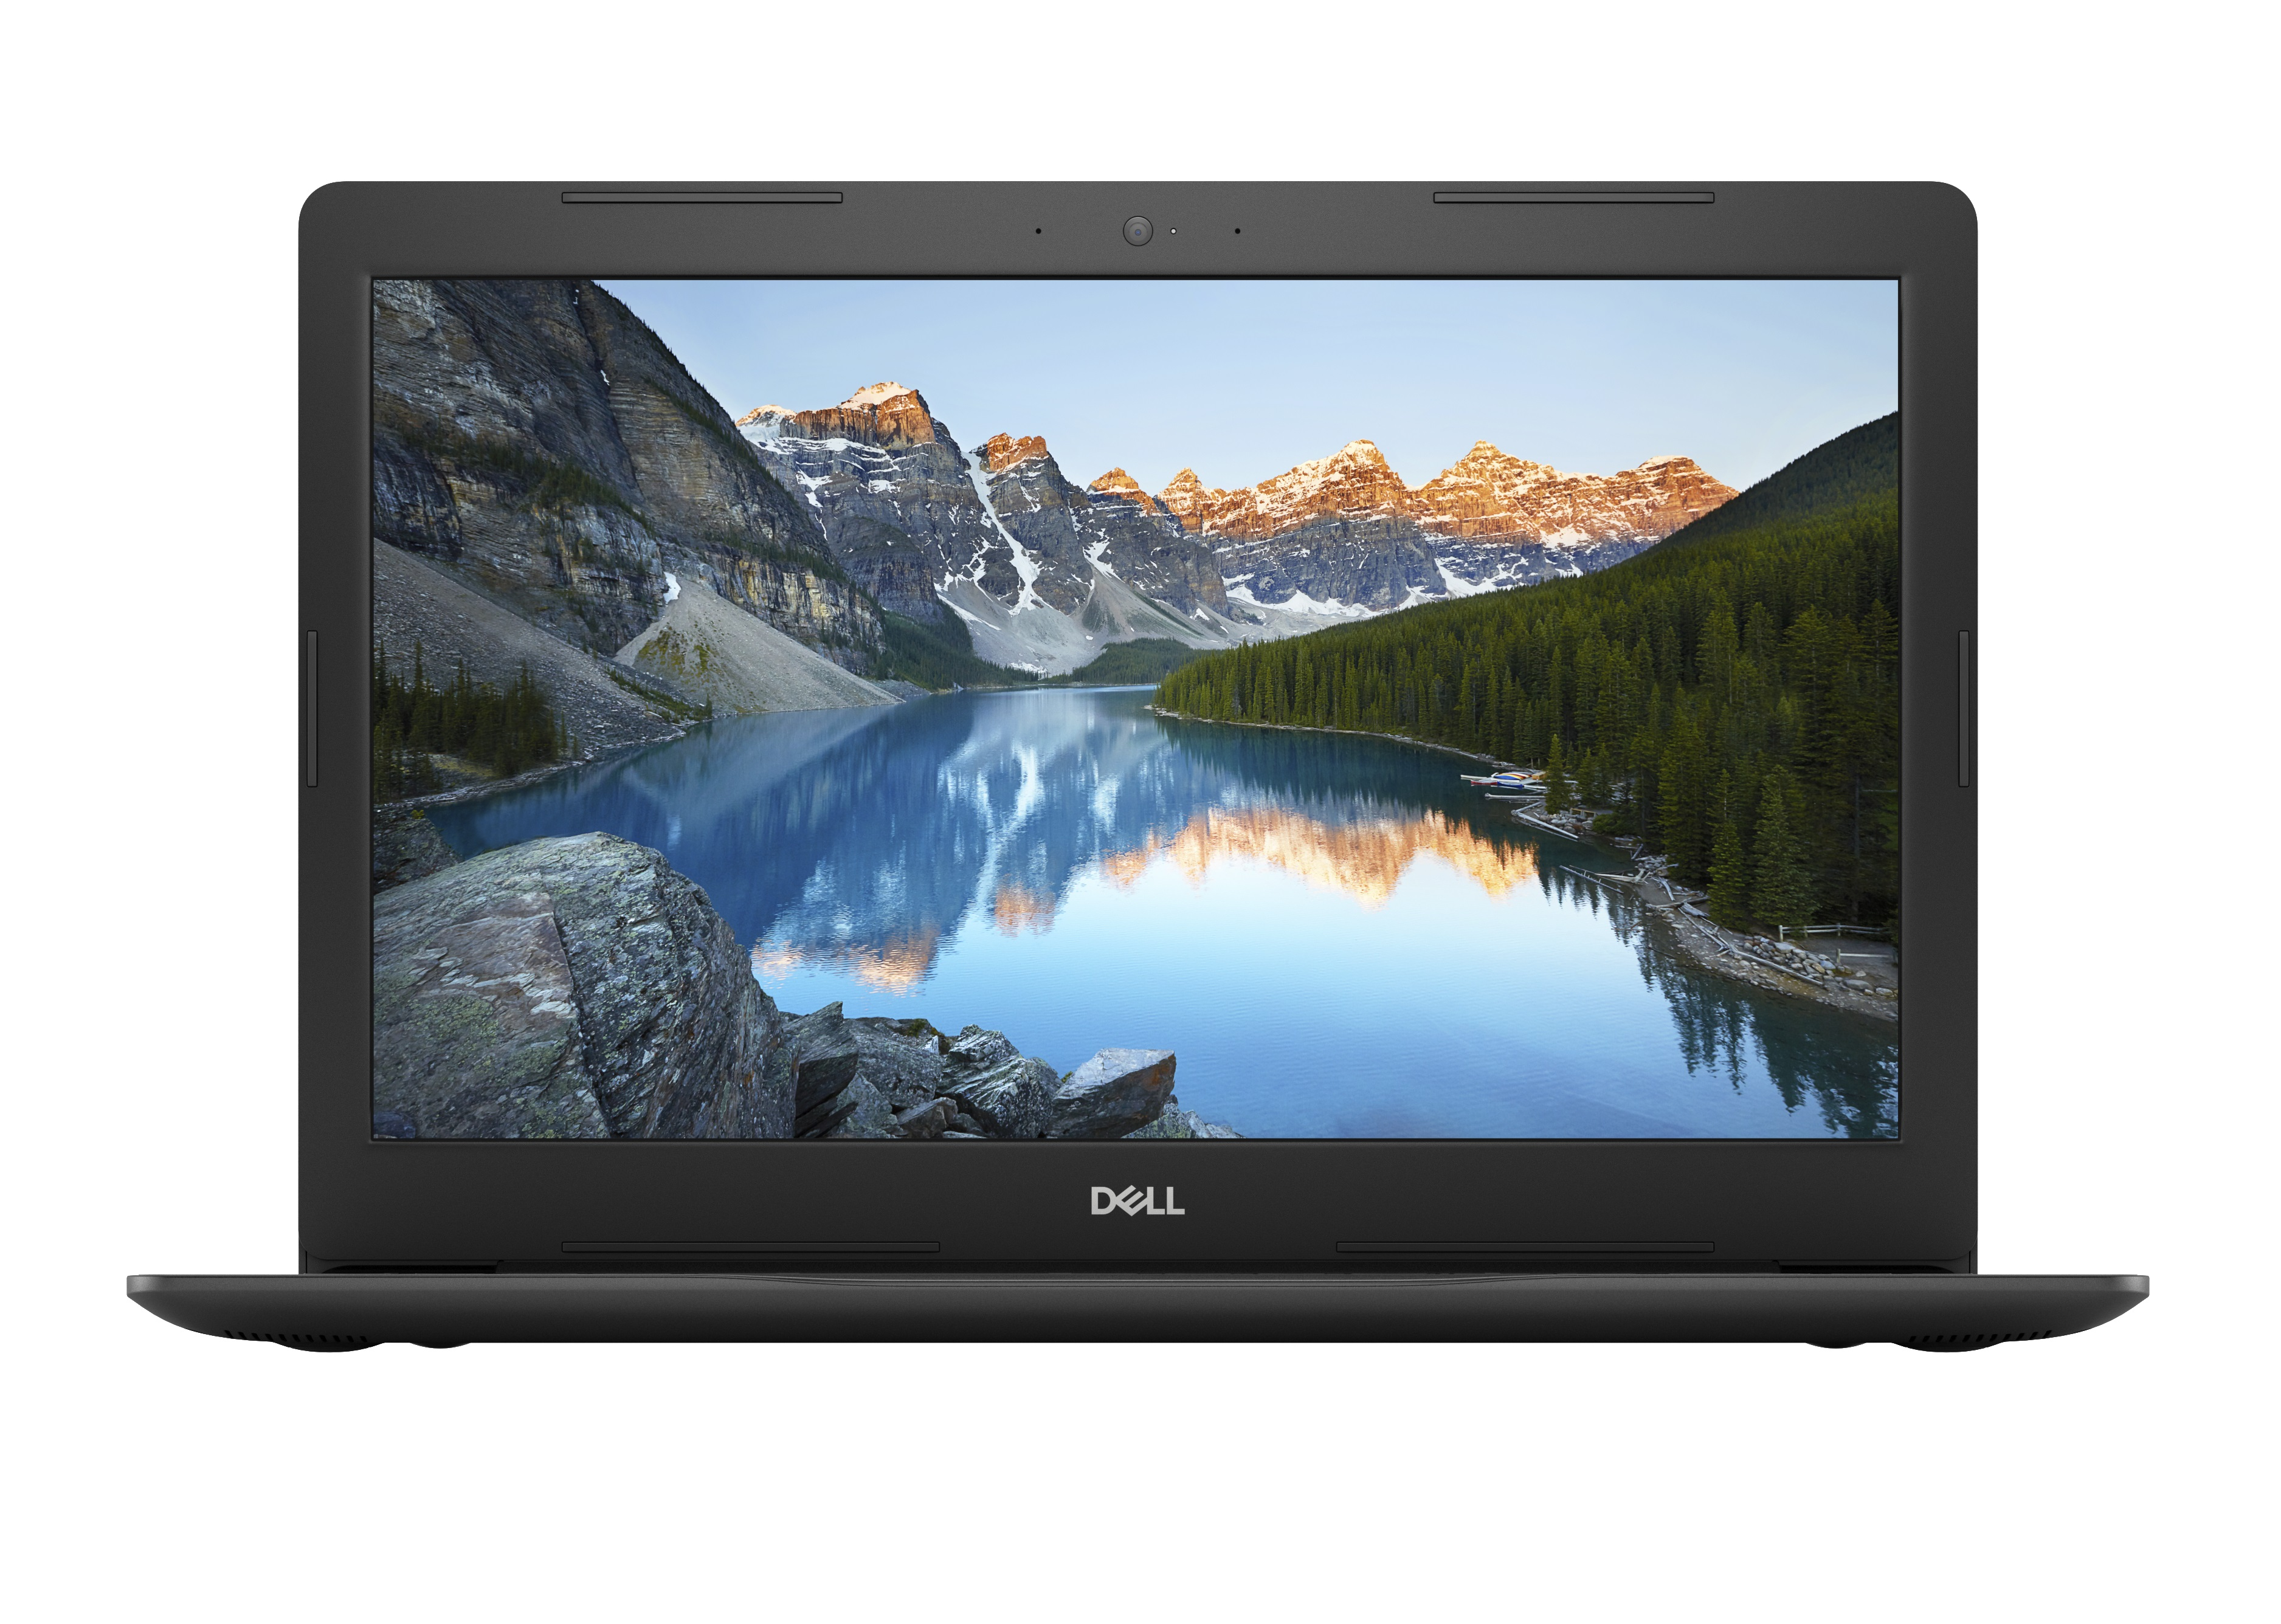 DELL Inspiron 5570 Laptop 1.80GHz i7-8550U 15.6-inch Black